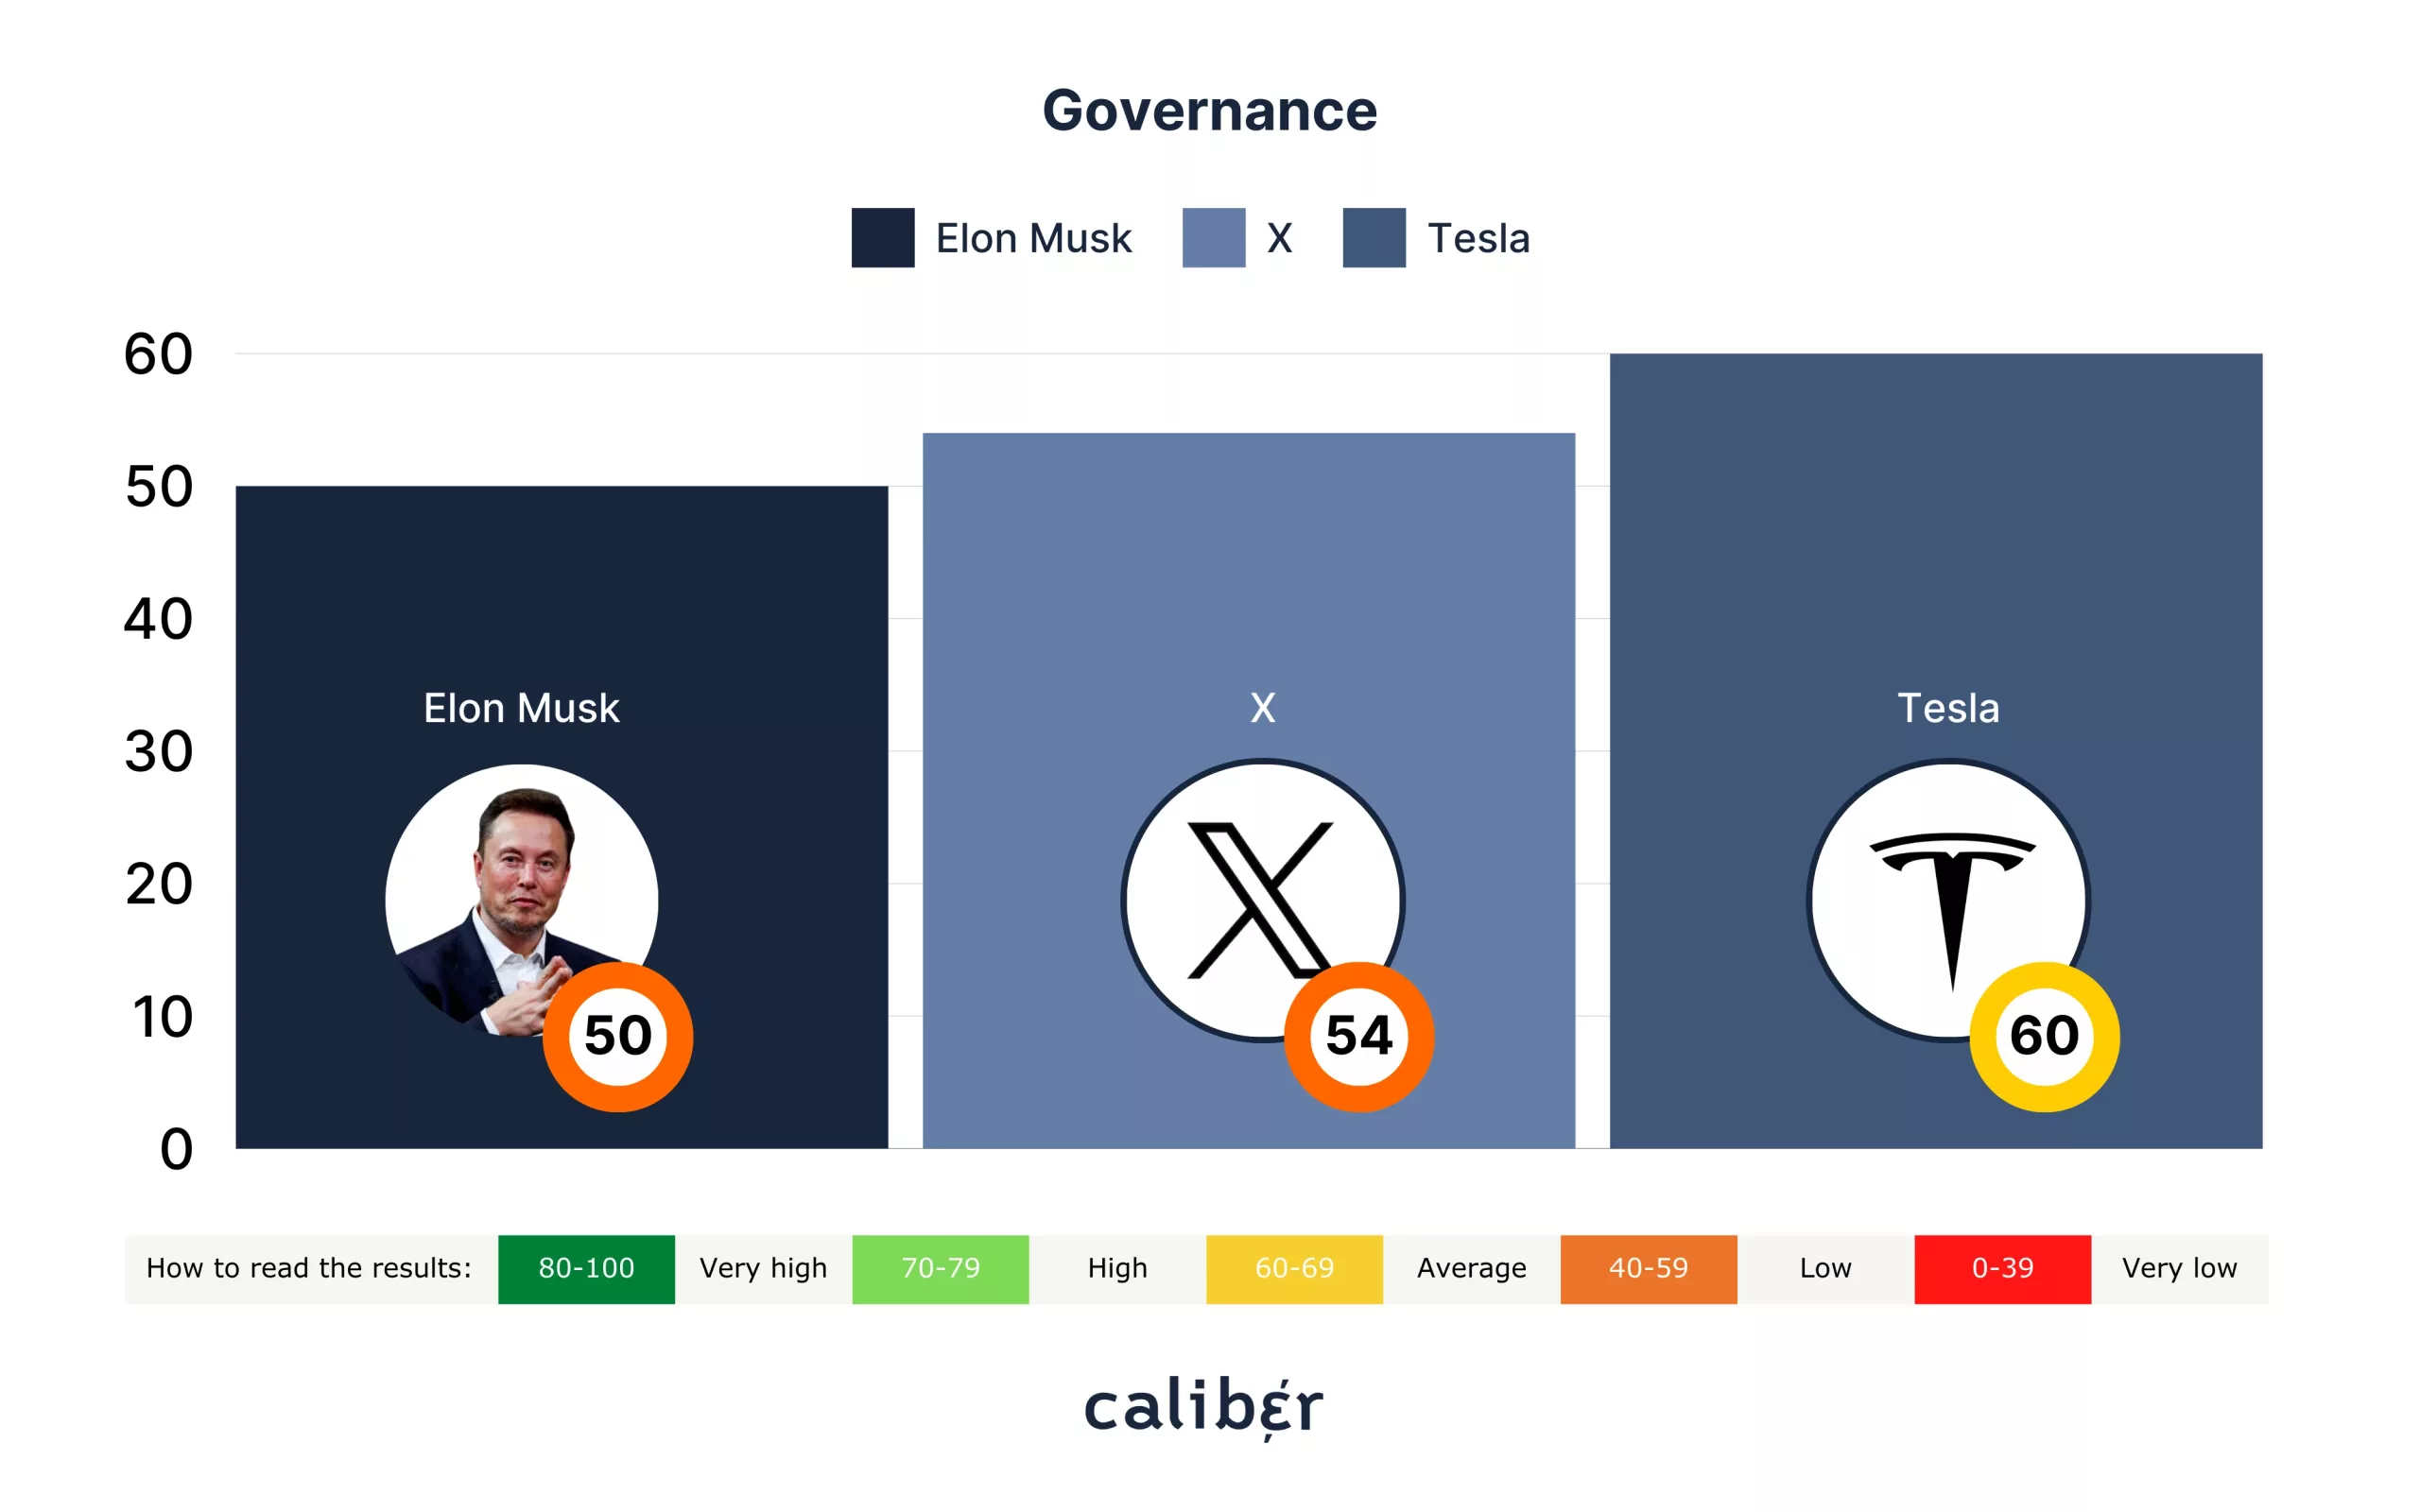 Elon Musk Governance Score